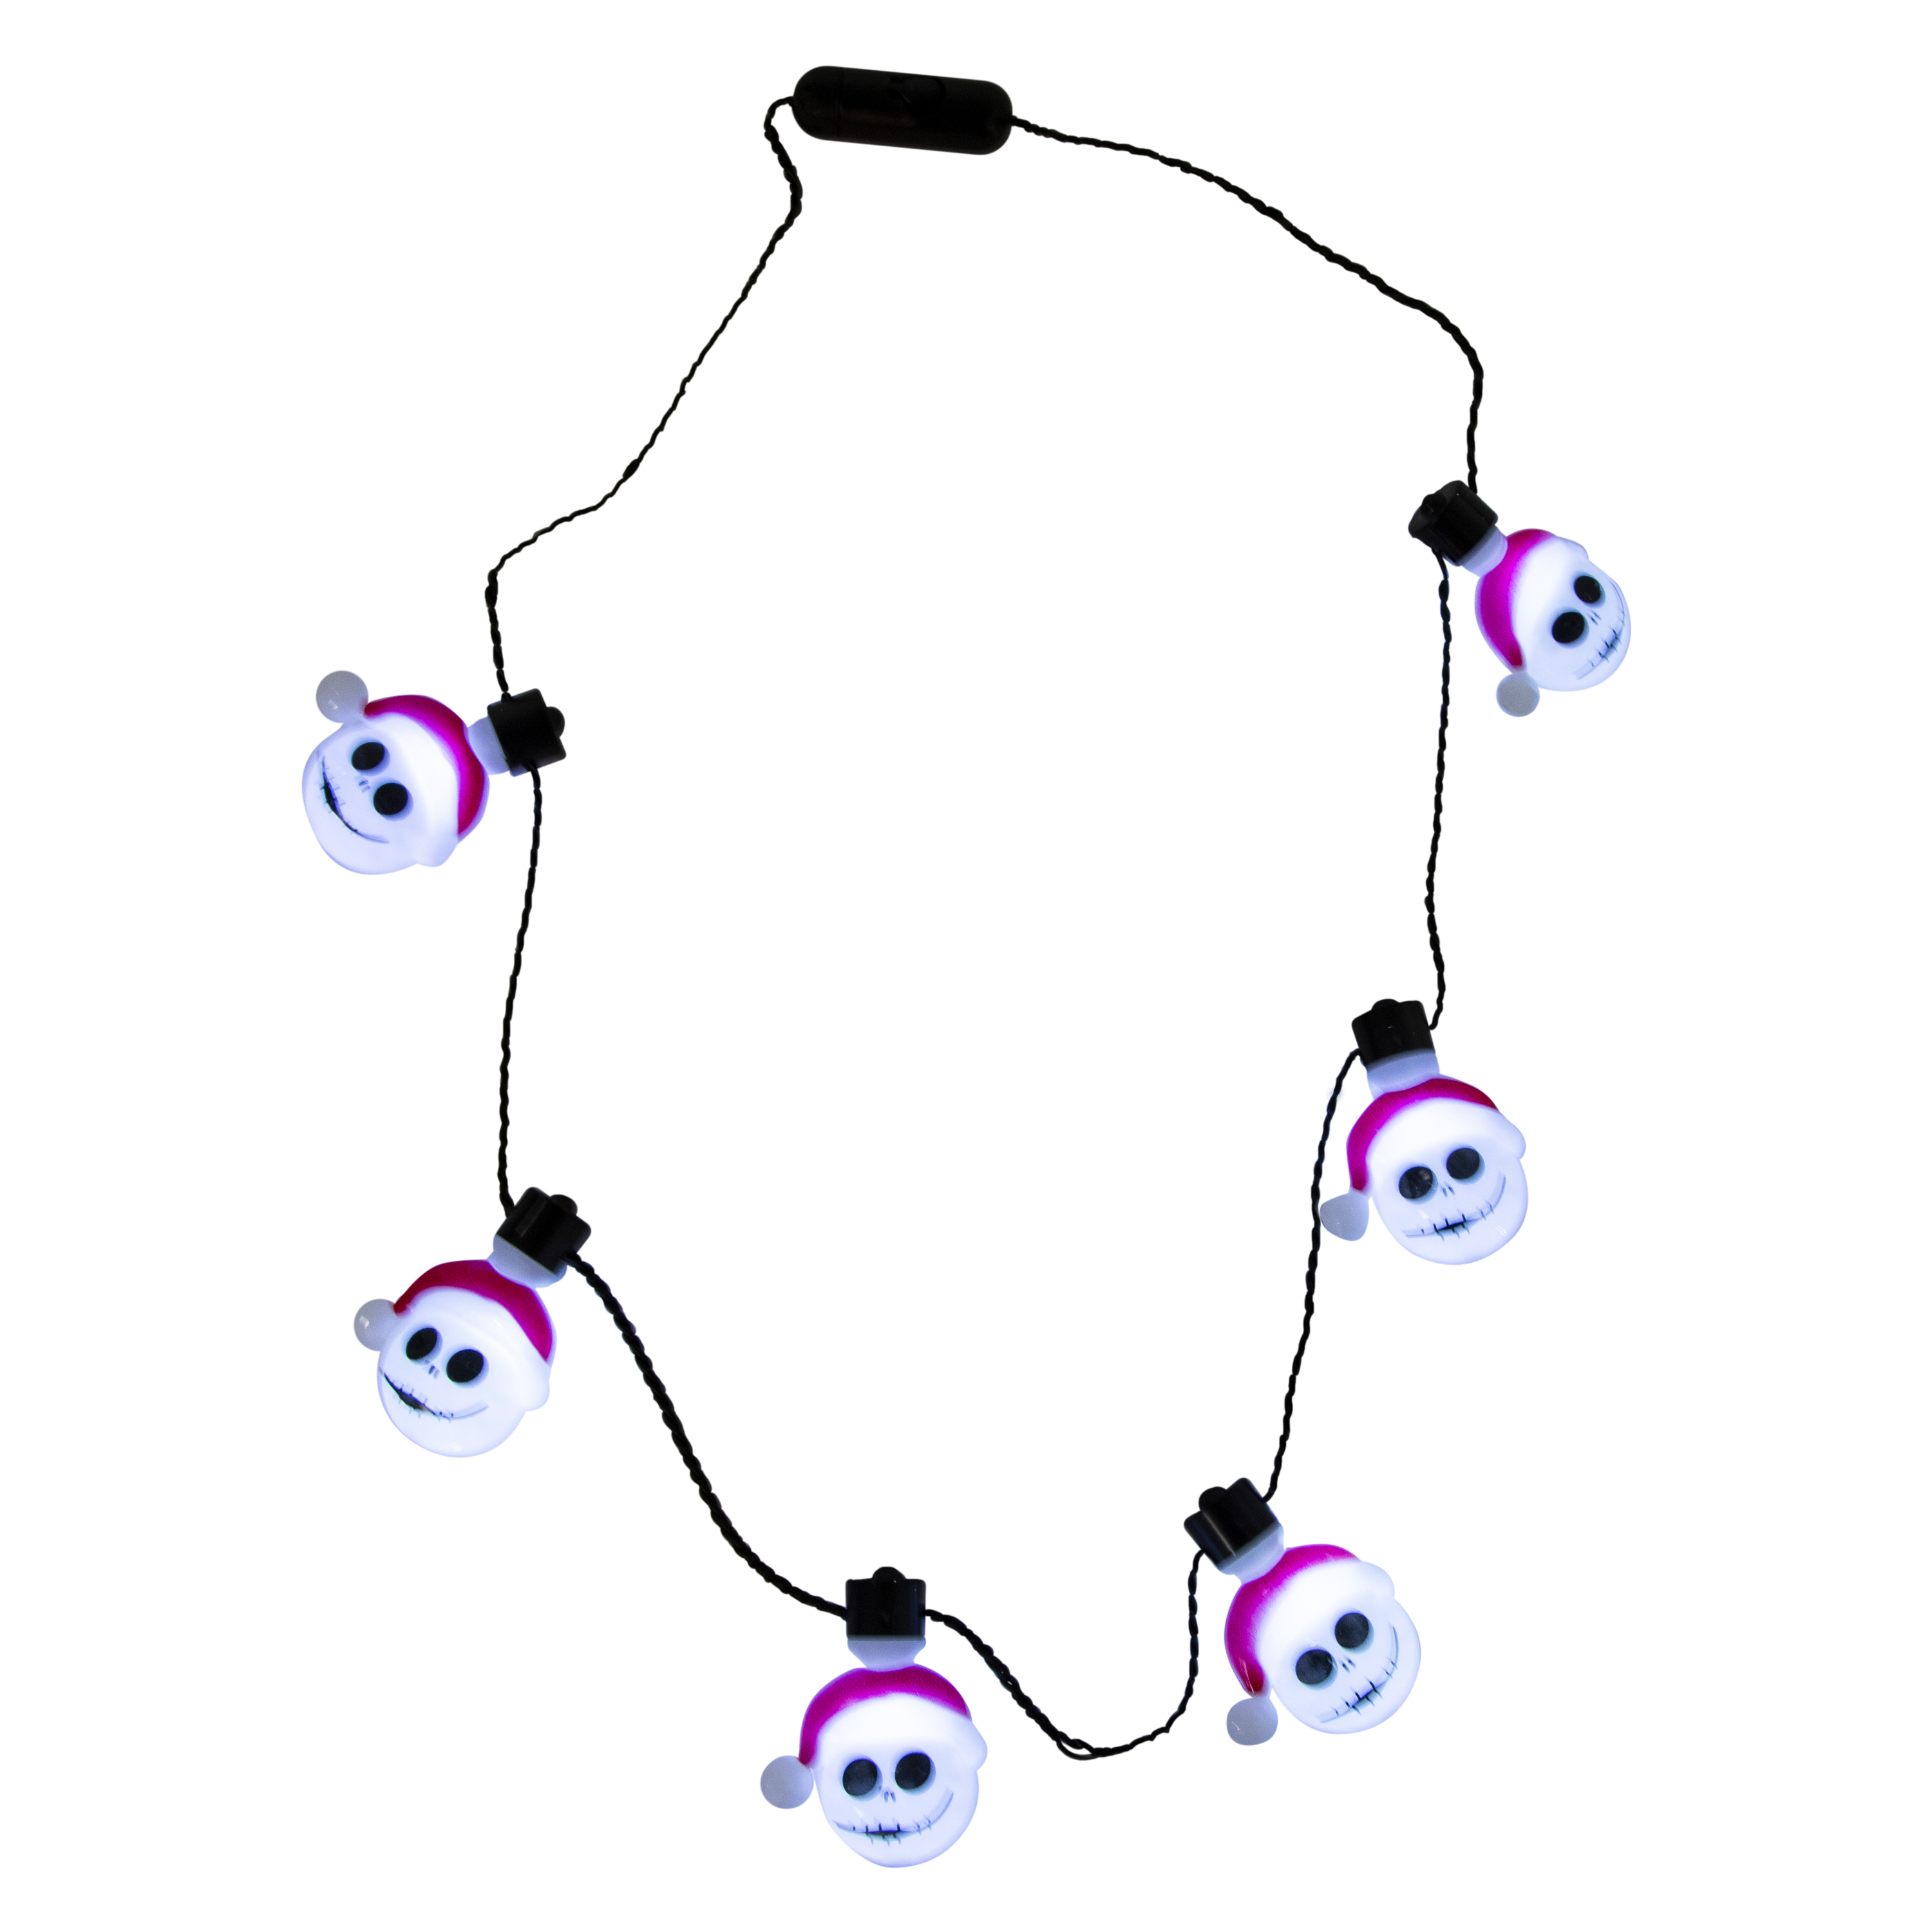 Disney Mickey Mouse Christmas Lights Bulbs Necklace Festive Colorful Nice!  | eBay